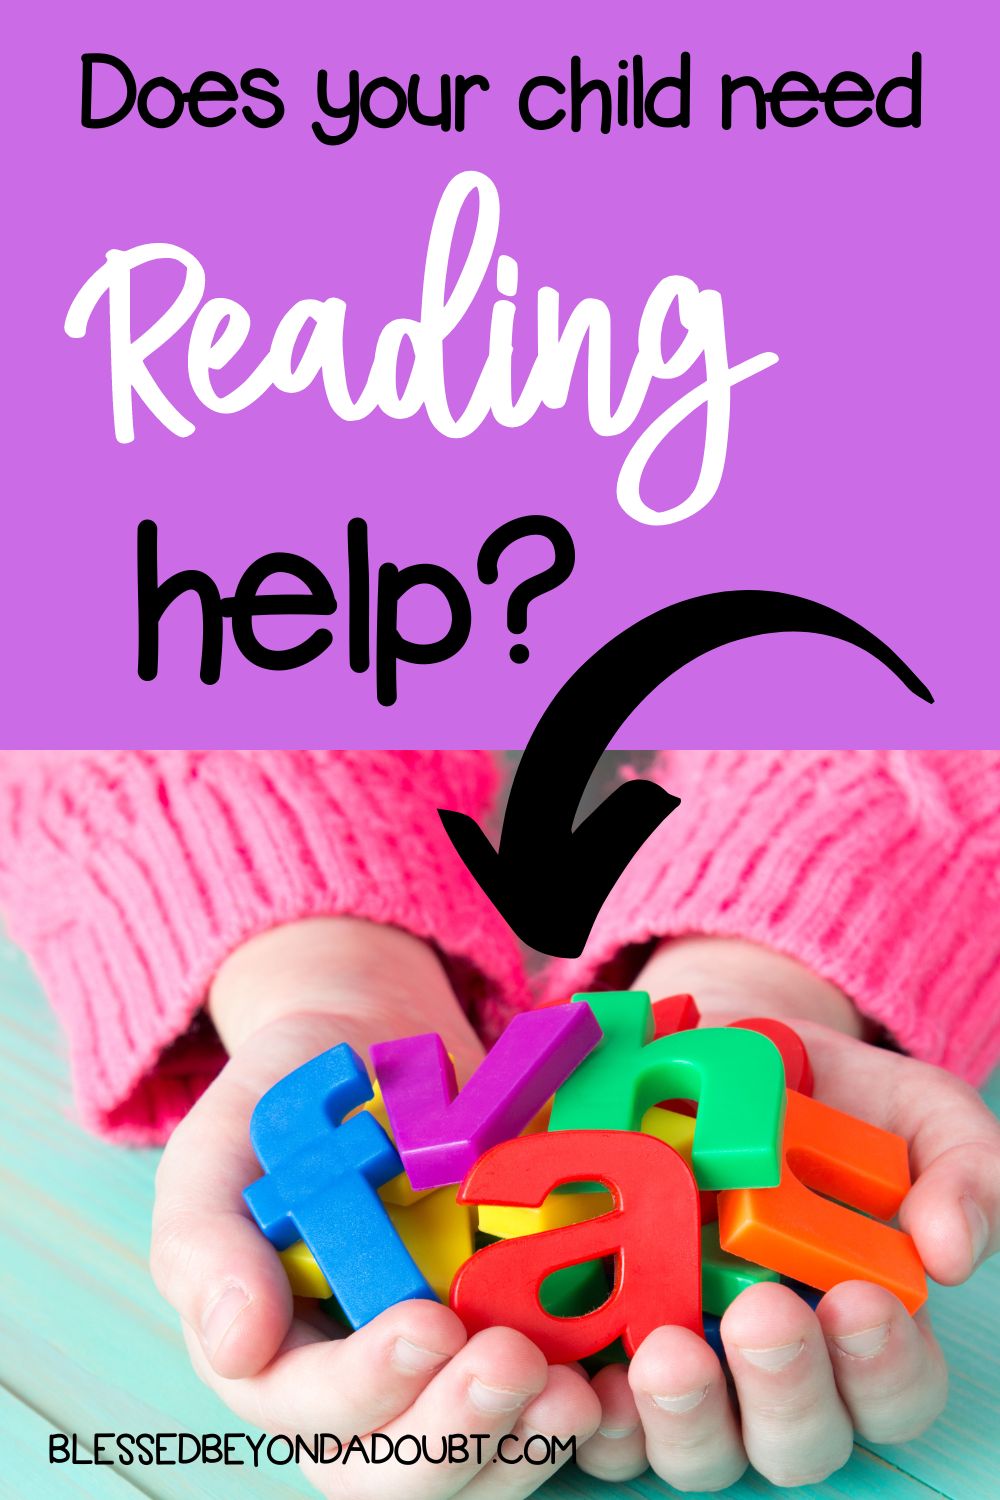 #readingeggs #freephonics #homeschool #kindergarten #howtoteachreading